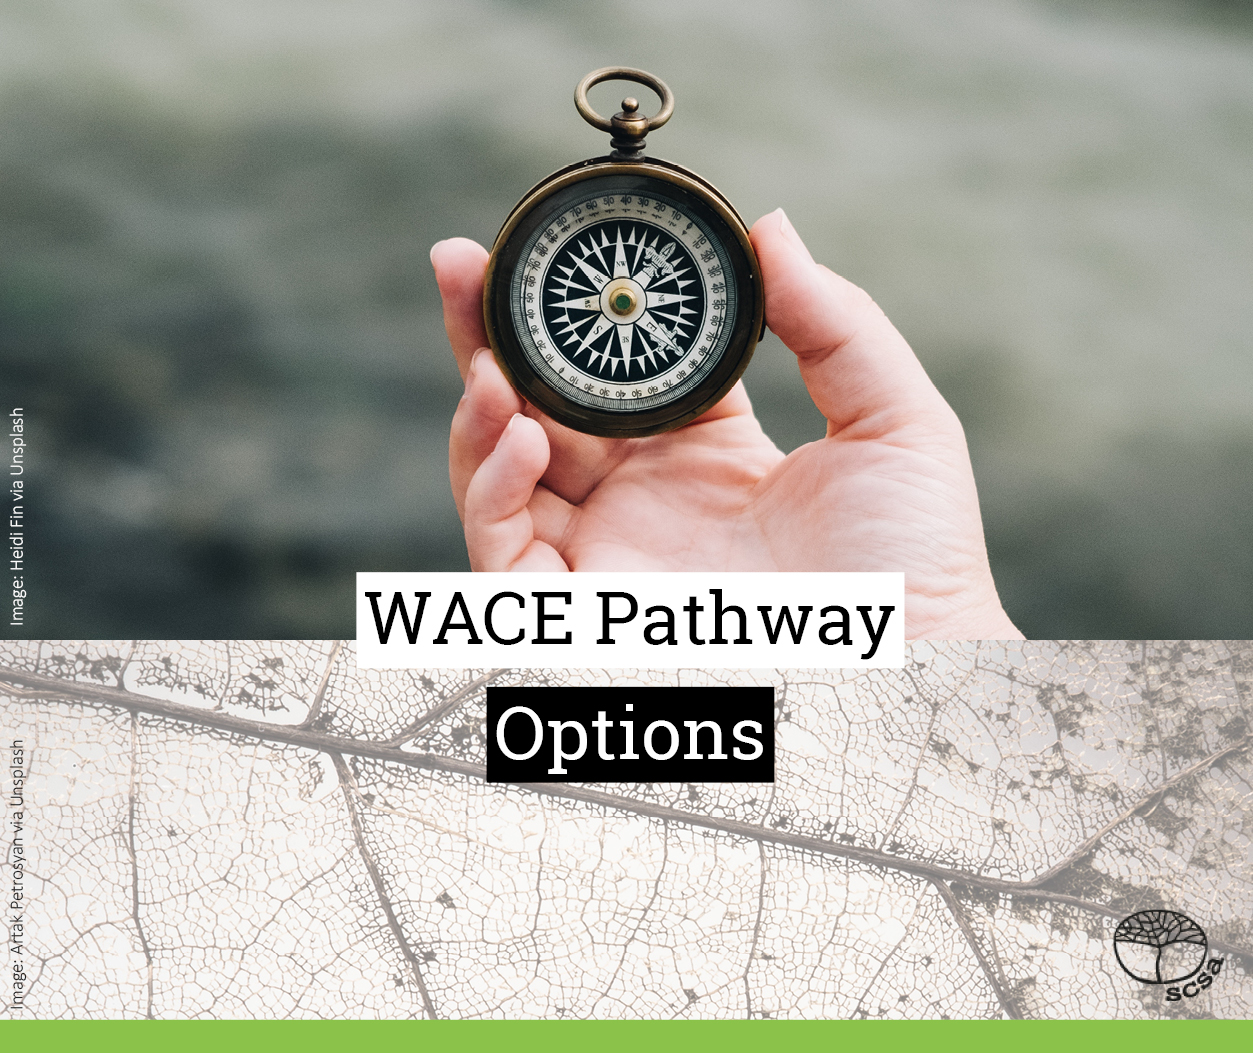 WACE pathway options